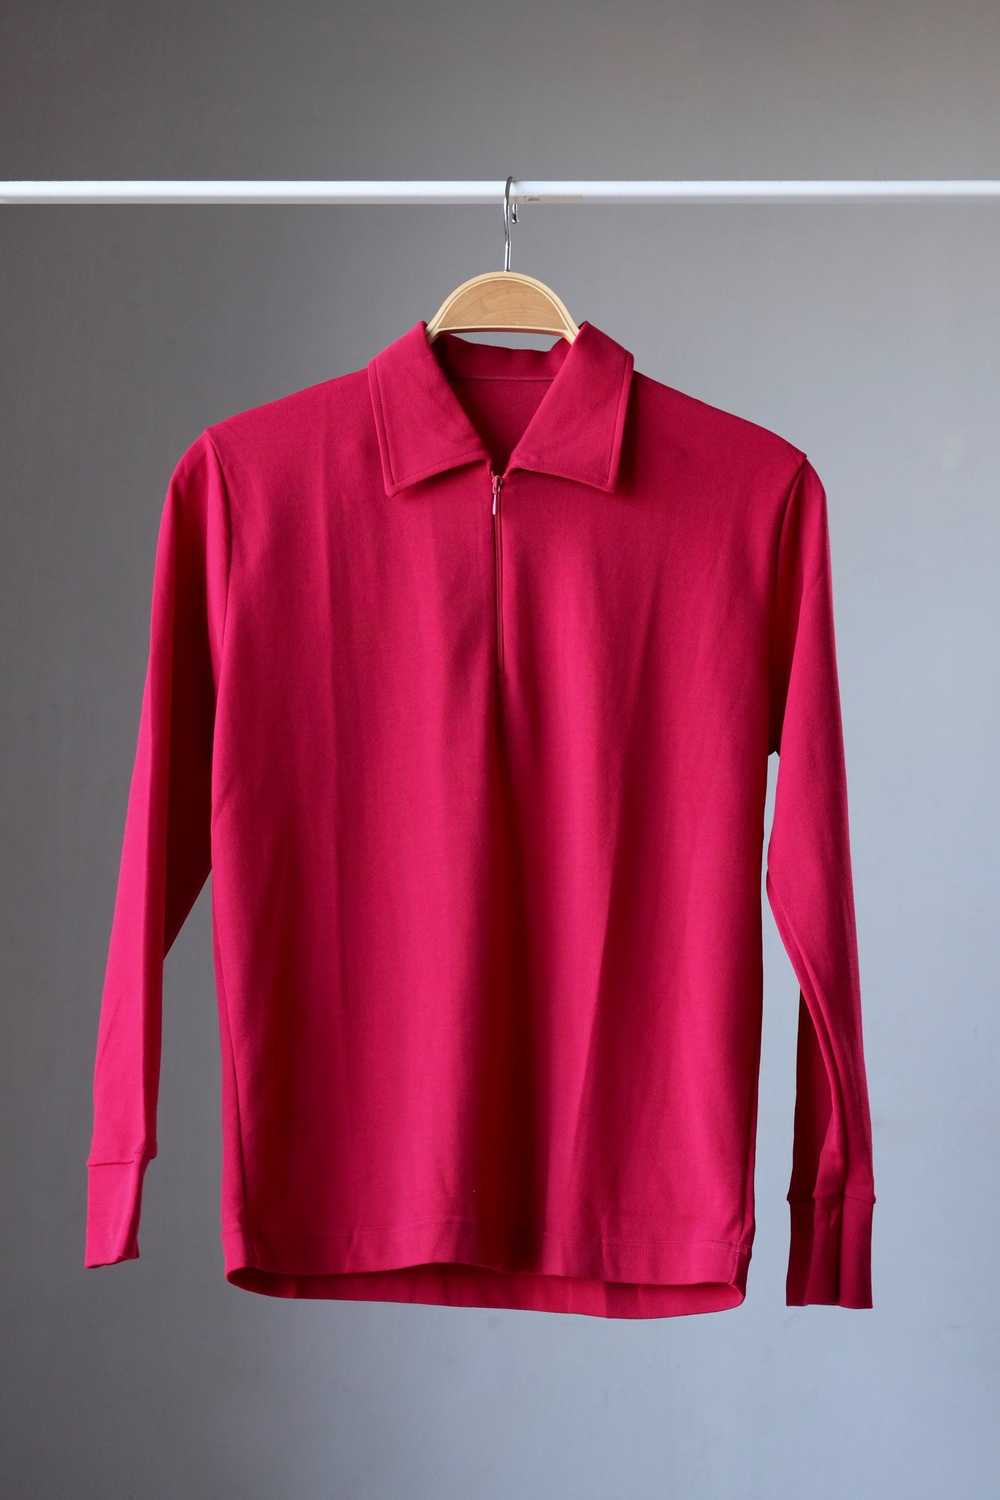 ZOFINA Long Sleeves 70s Polo Shirt - image 2